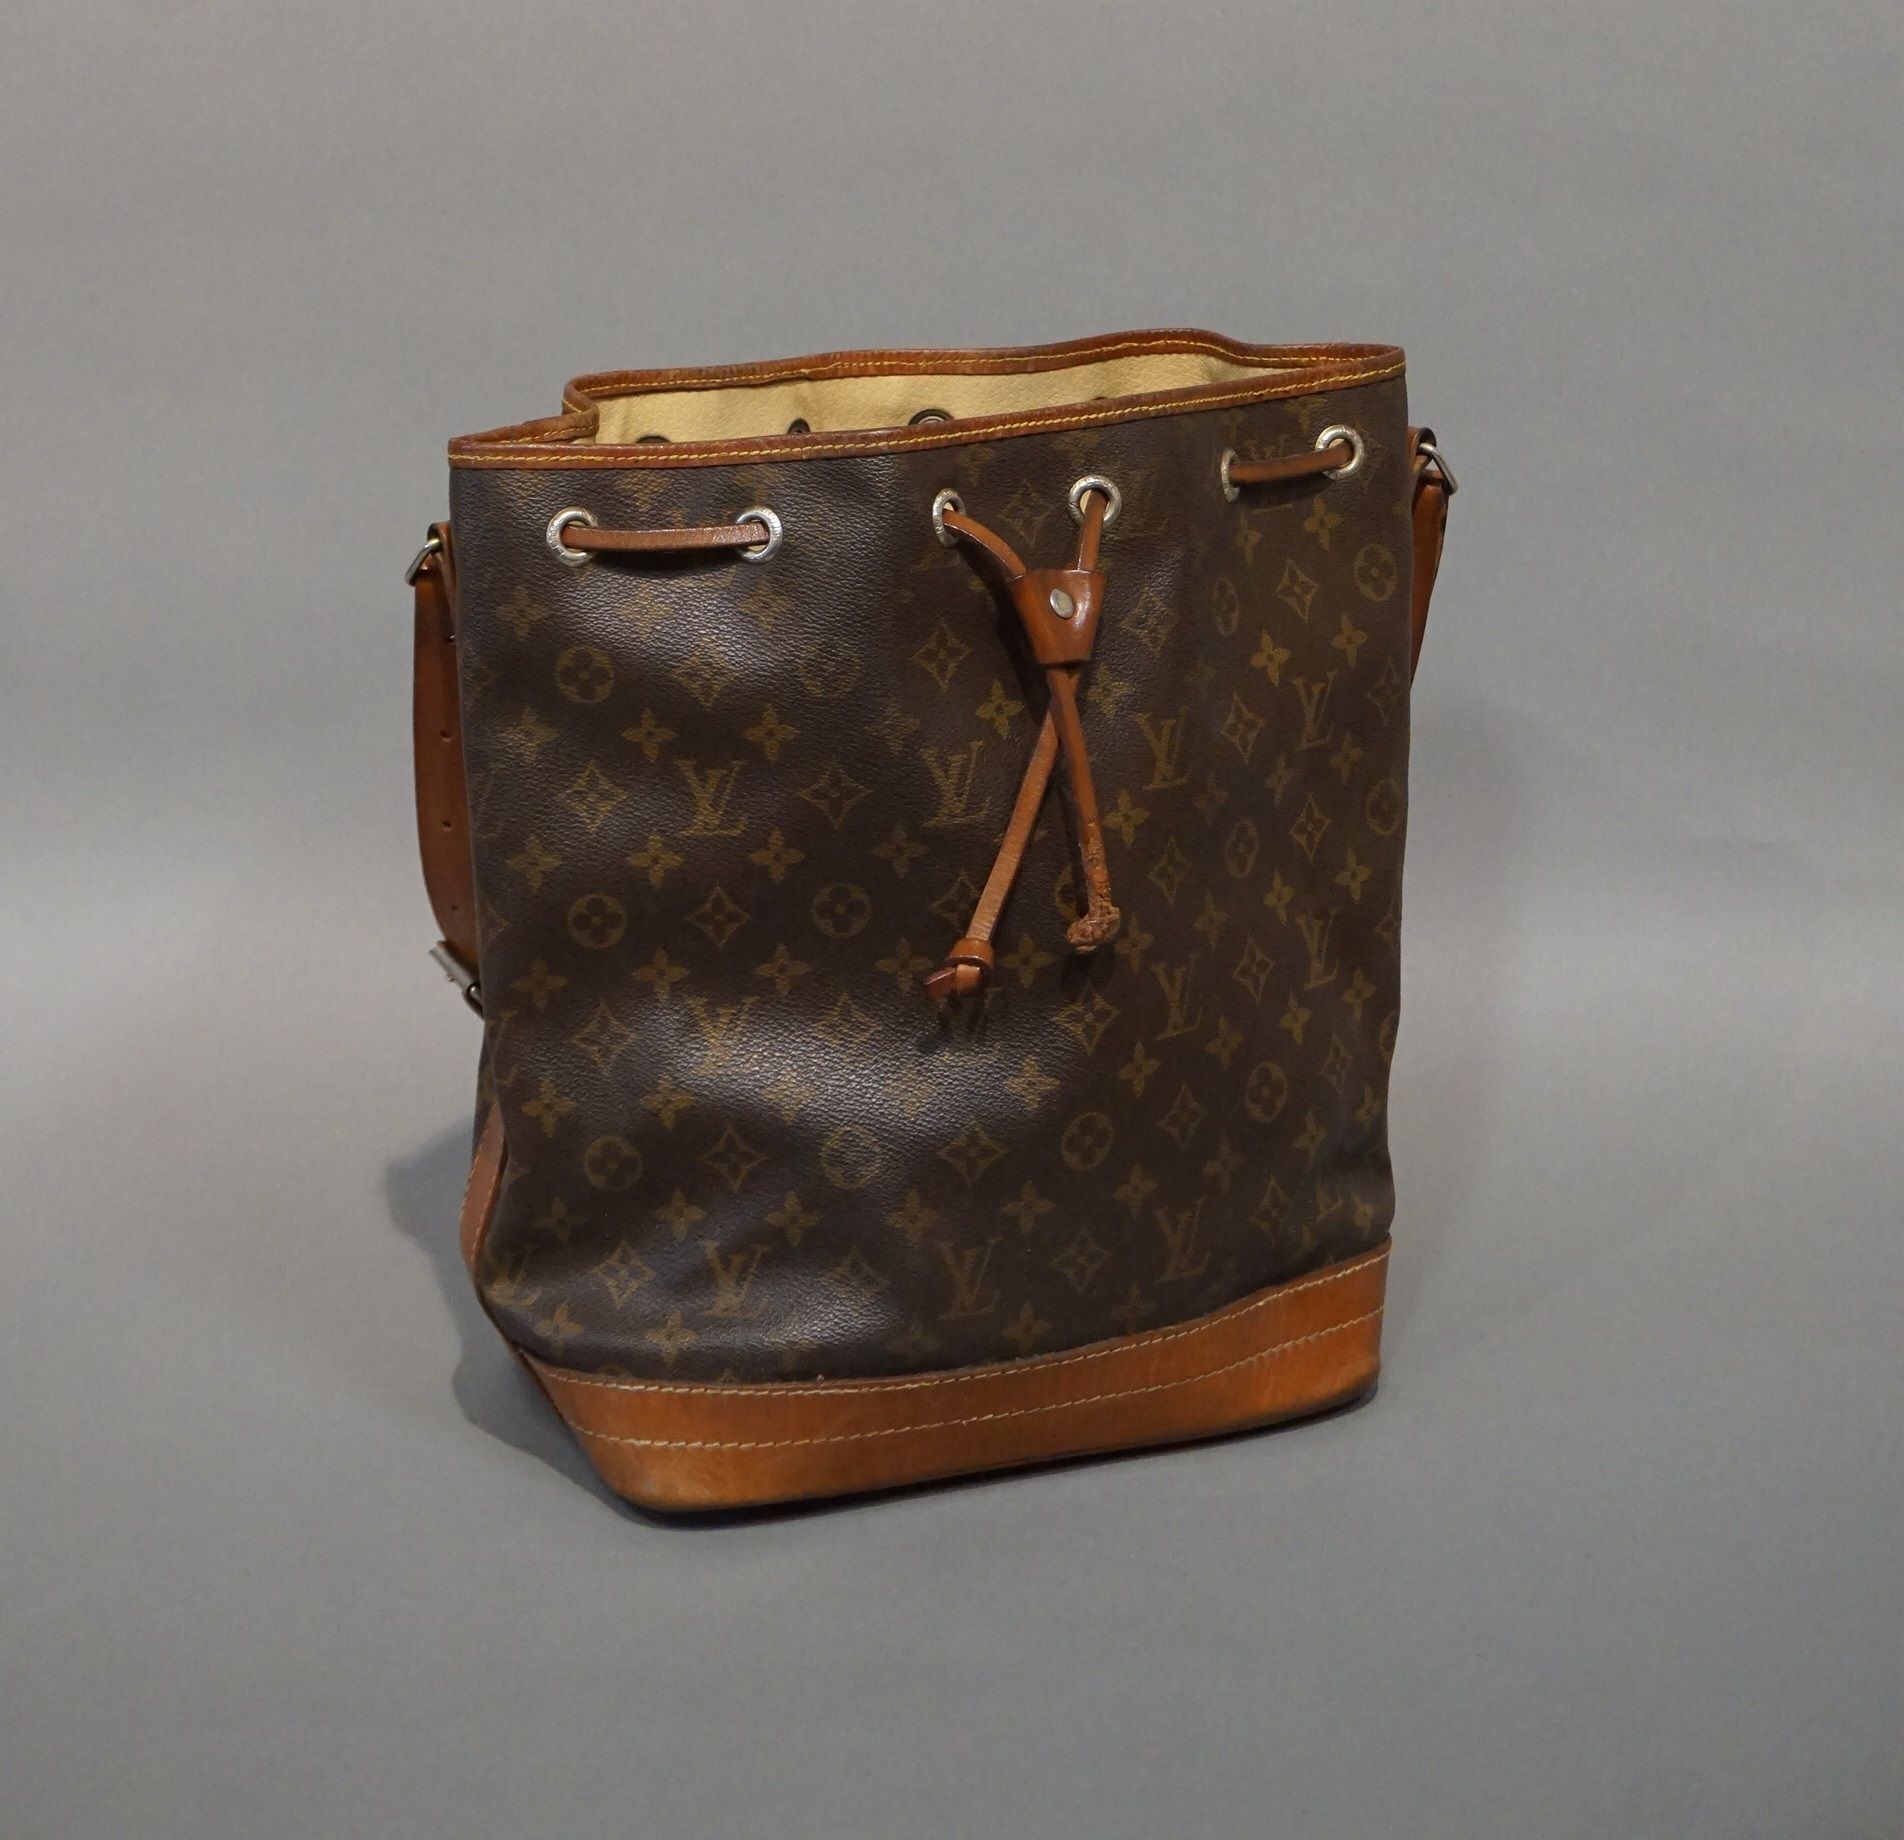 VUITTON 路易威登: "tambour "型手提包，带肩带，采用有图案的涂层帆布（磨损）。35x35厘米